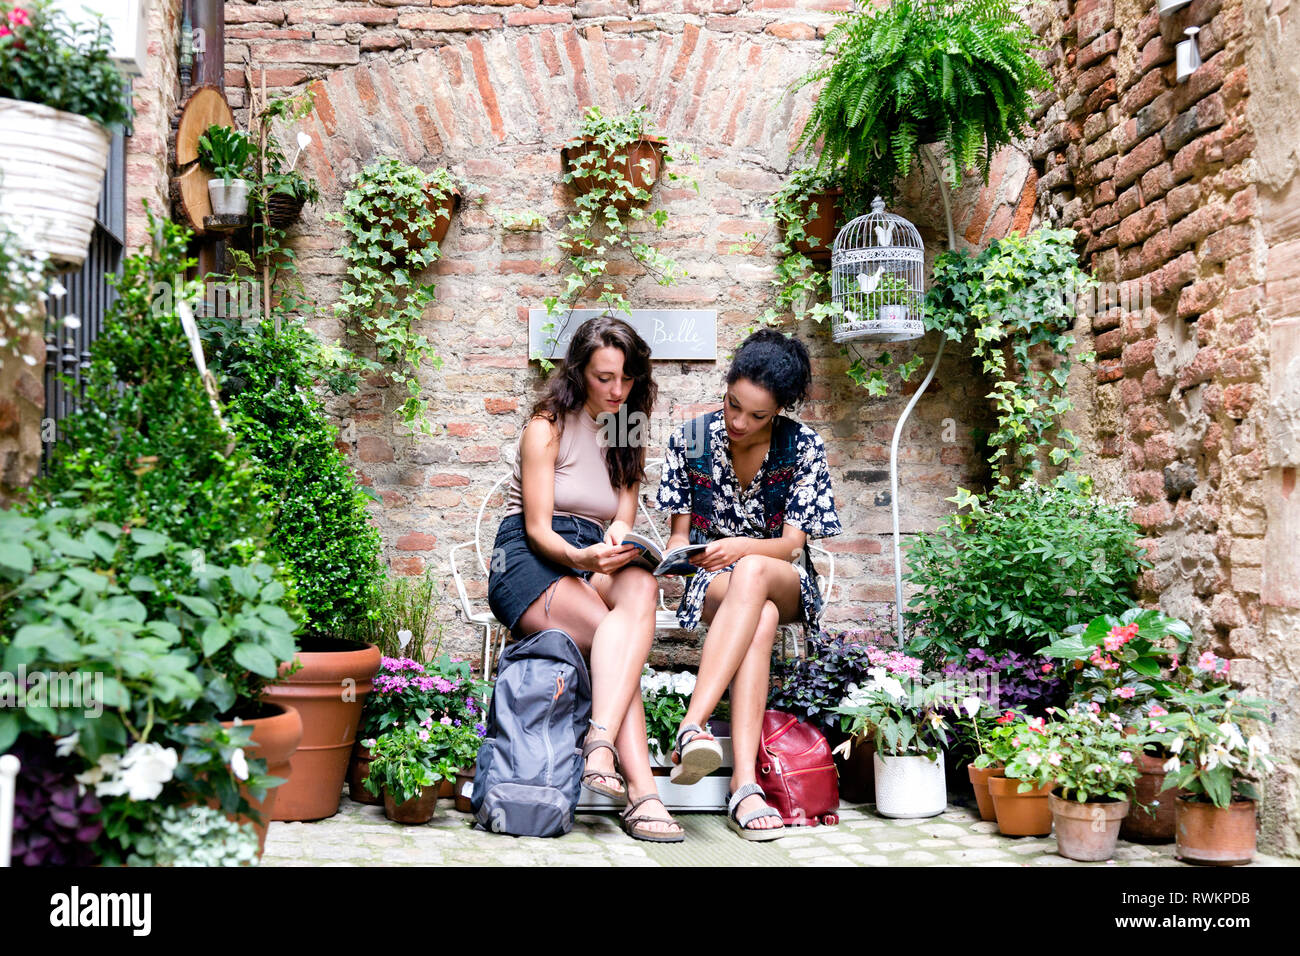 Friends enjoying peaceful corner with plants, Città della Pieve, Umbria, Italy Stock Photo